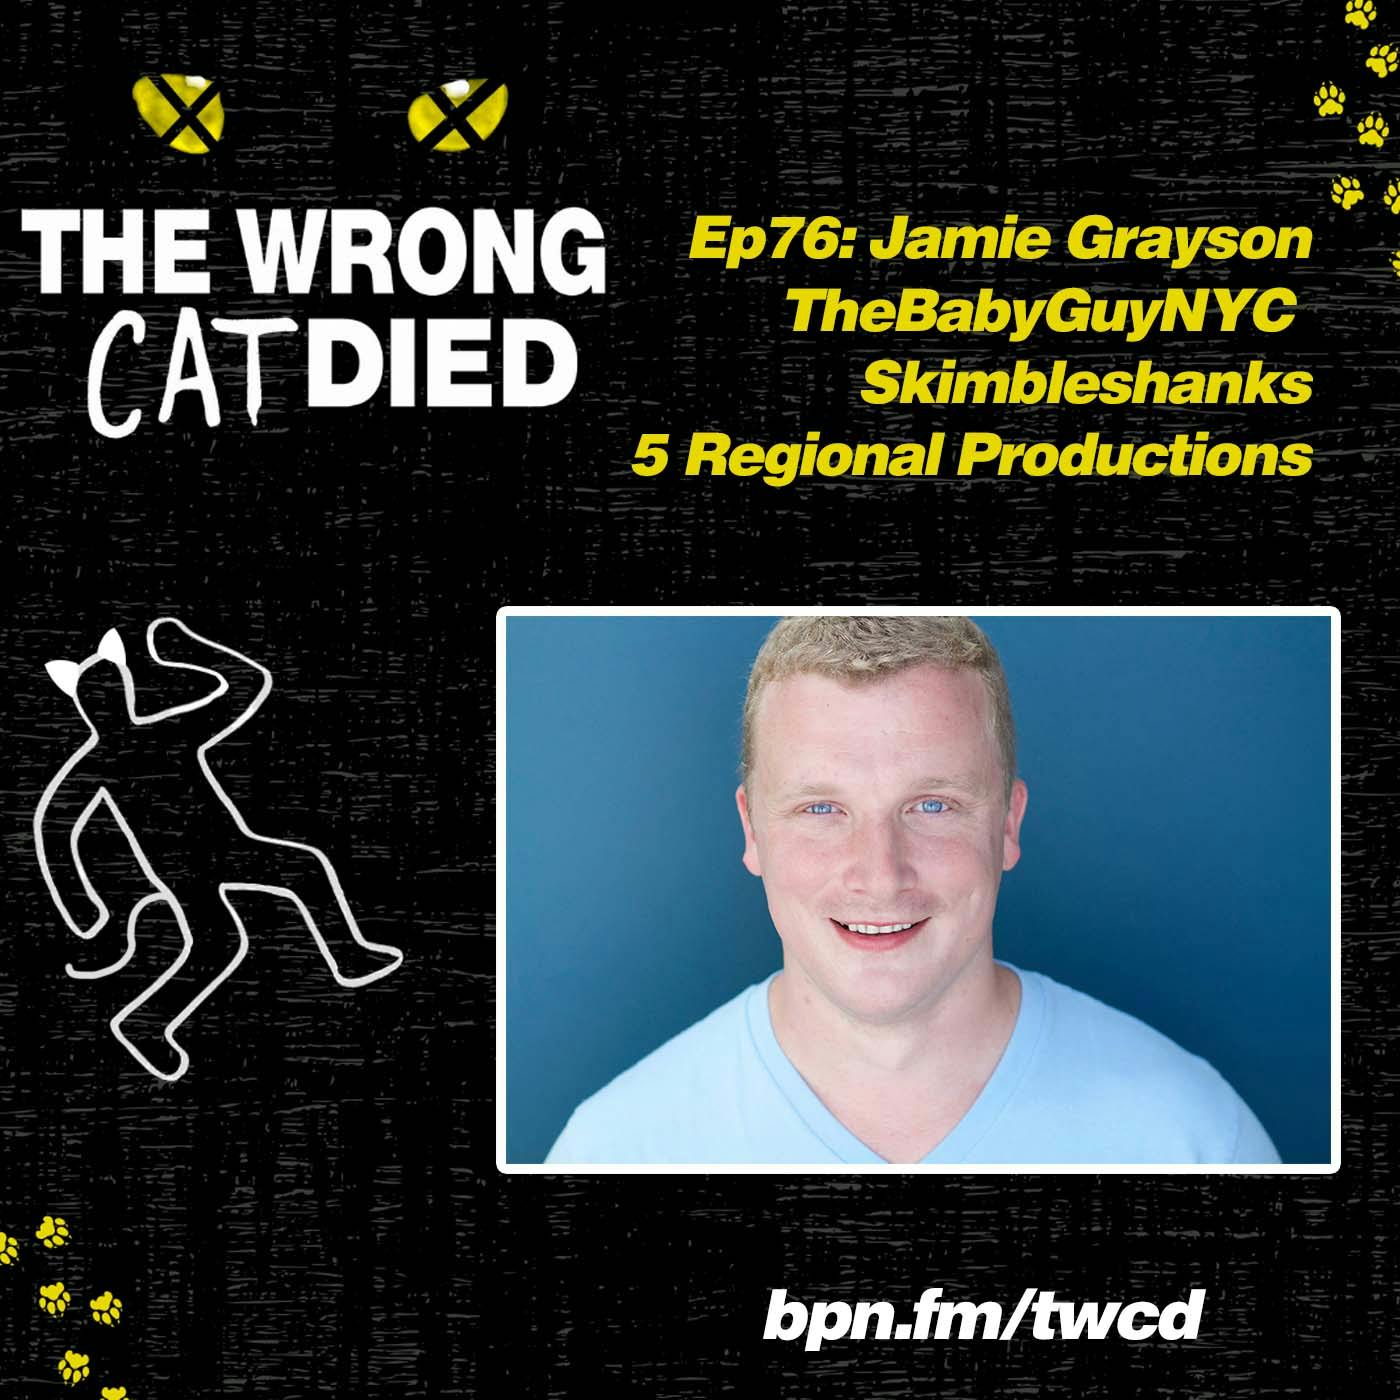 Ep76 - Jamie Grayson, TheBabyGuyNYC and Skimbleshanks in 5 Regional Productions